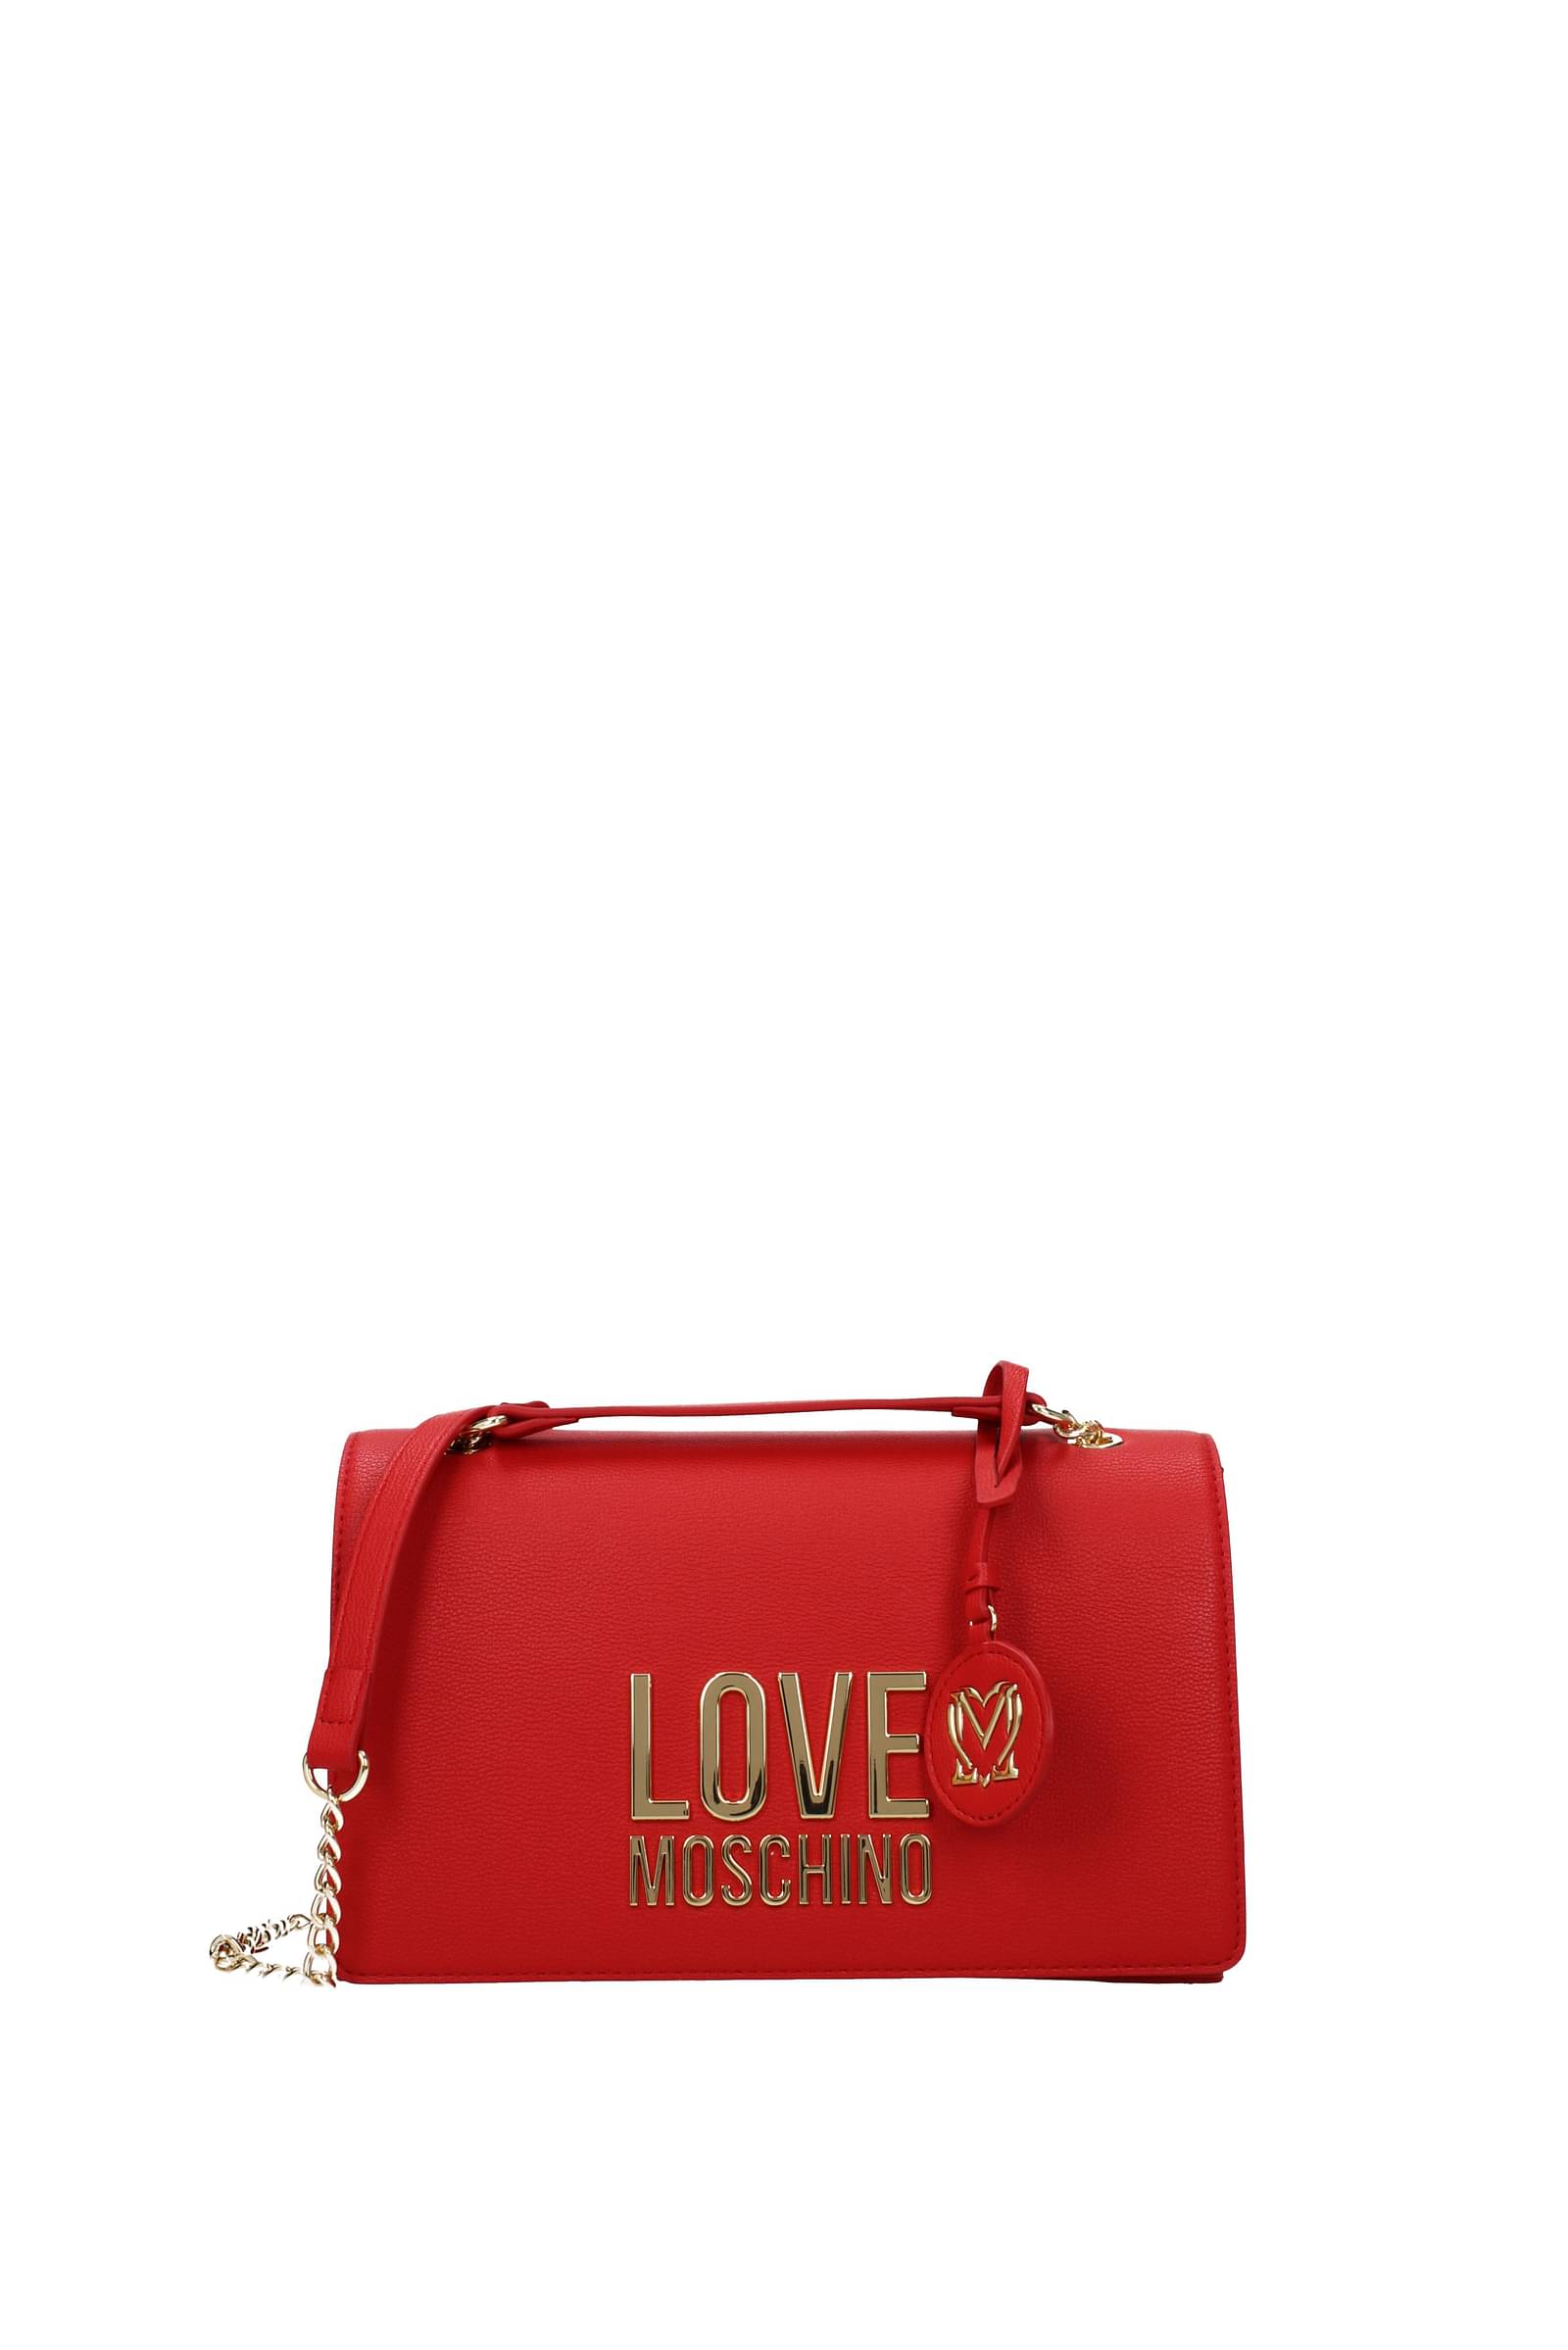 LOVE MOSCHINO Shoulder Bag | Loverlock